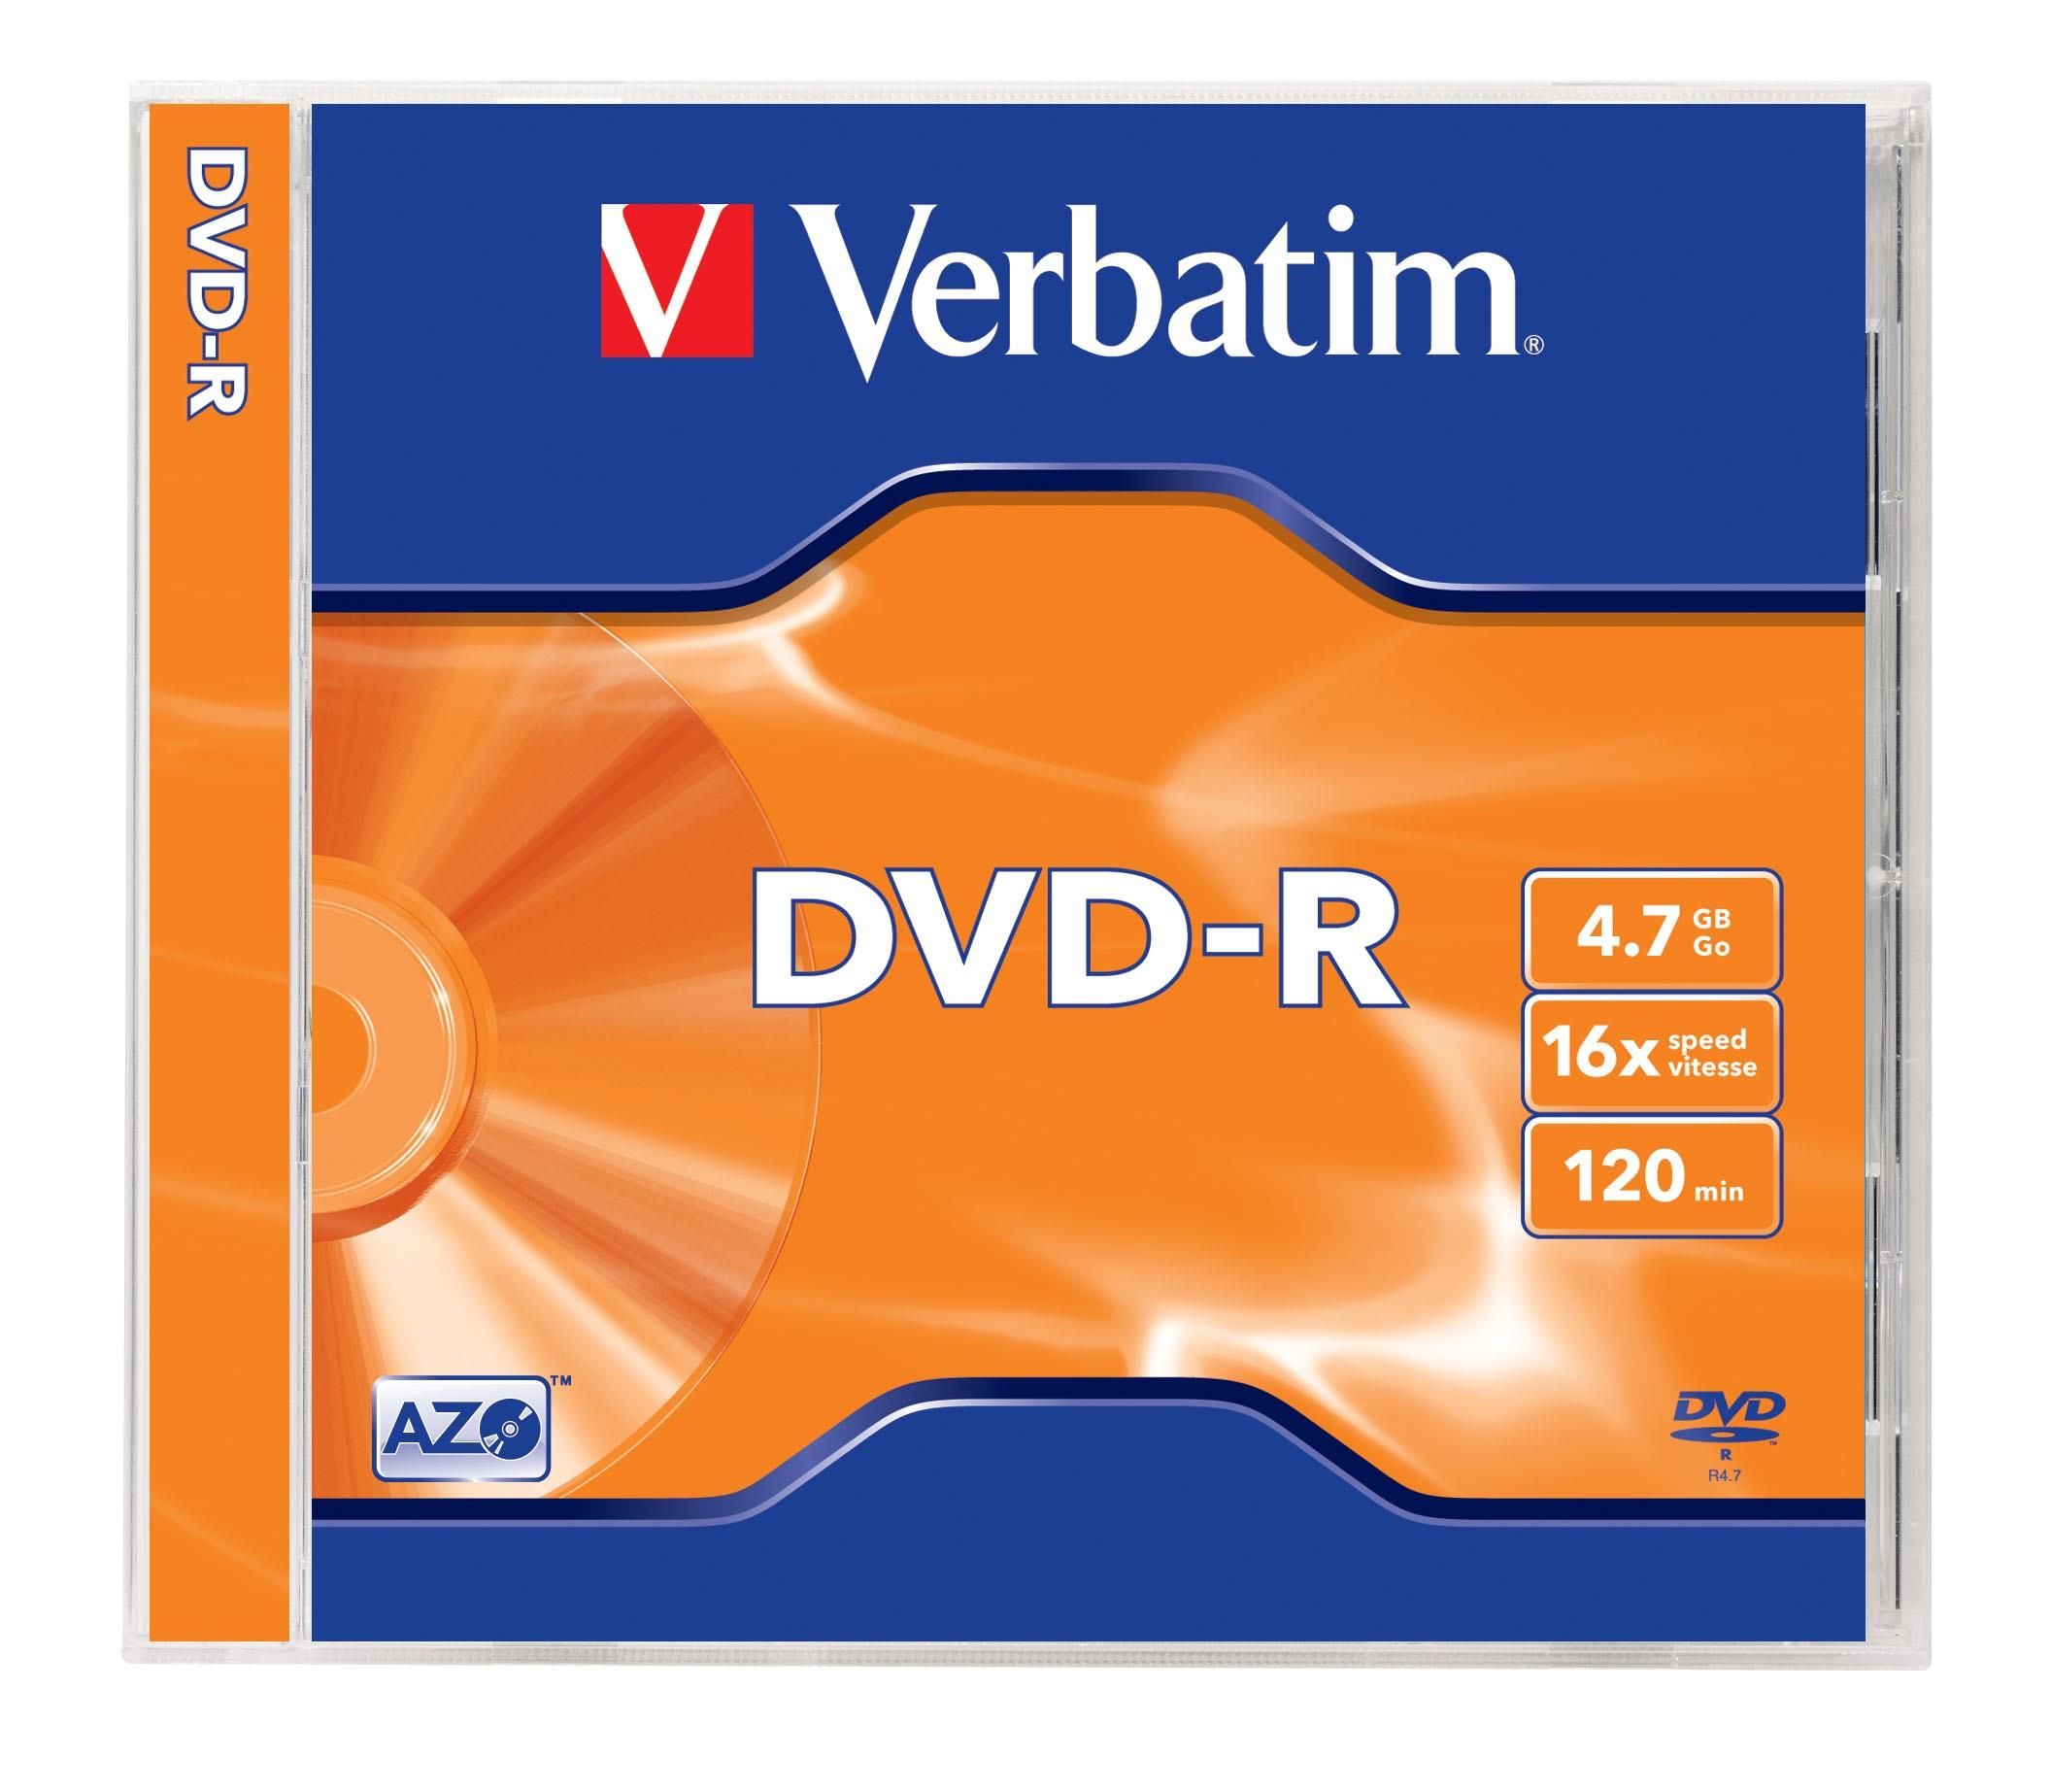 Verbatim Dvd-r 4.7gb 16x